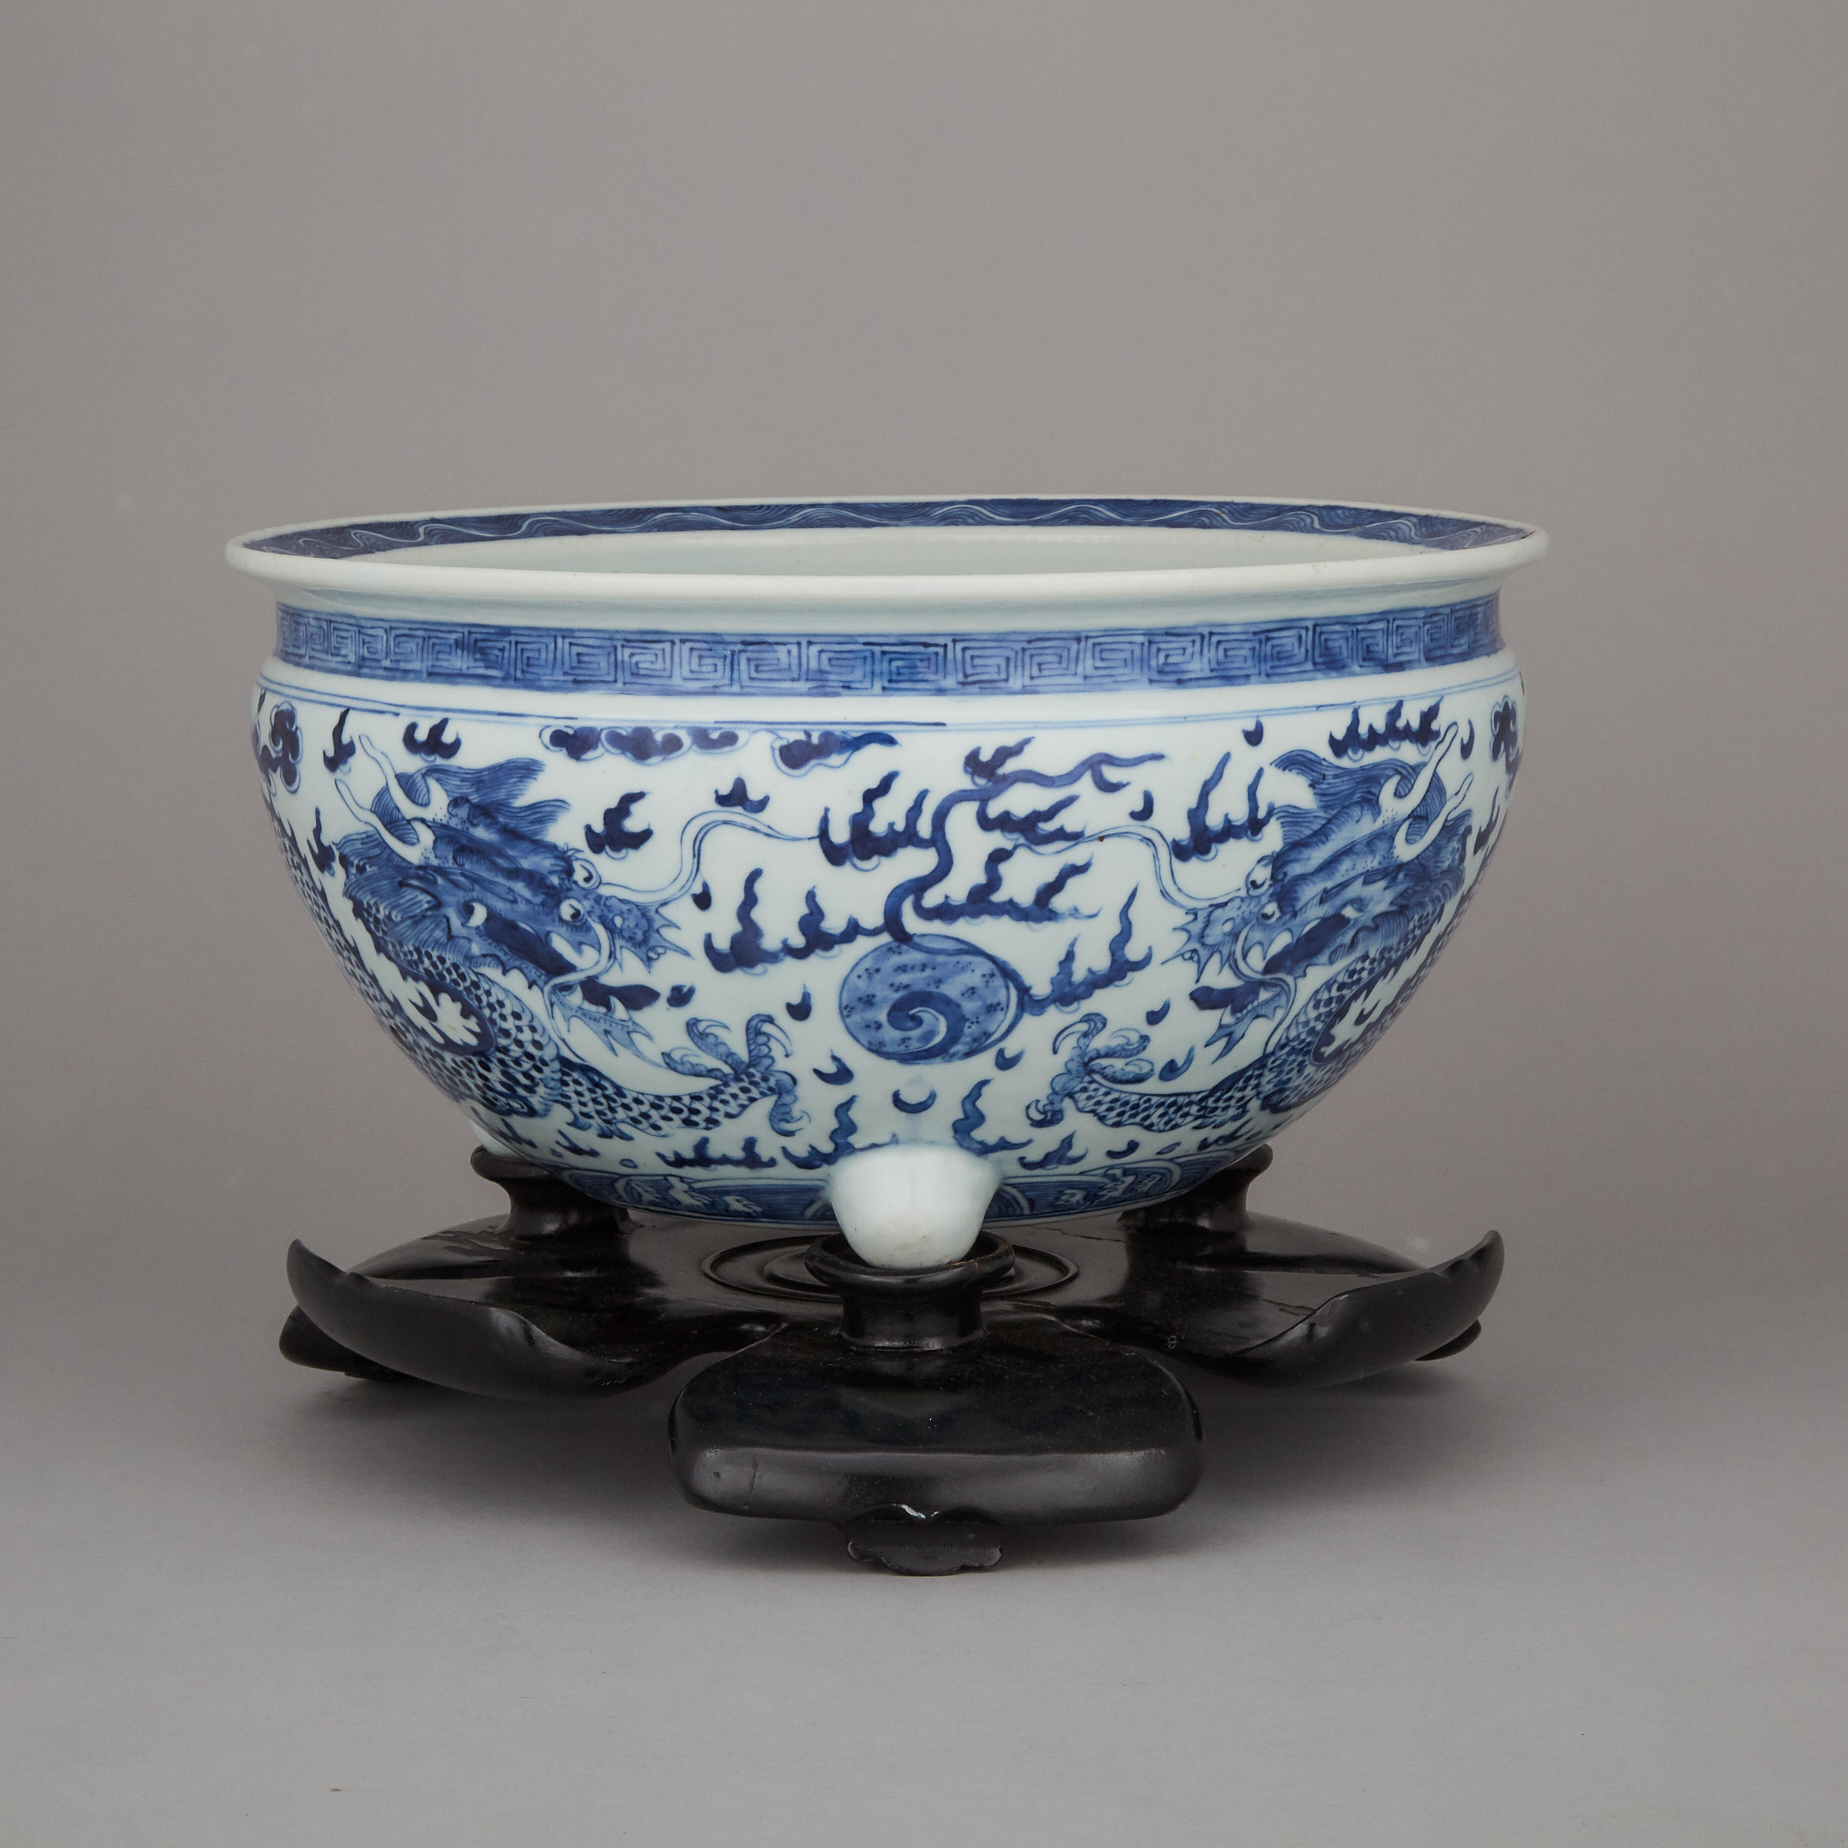 A Blue and White Porcelain 'Dragon' Basin